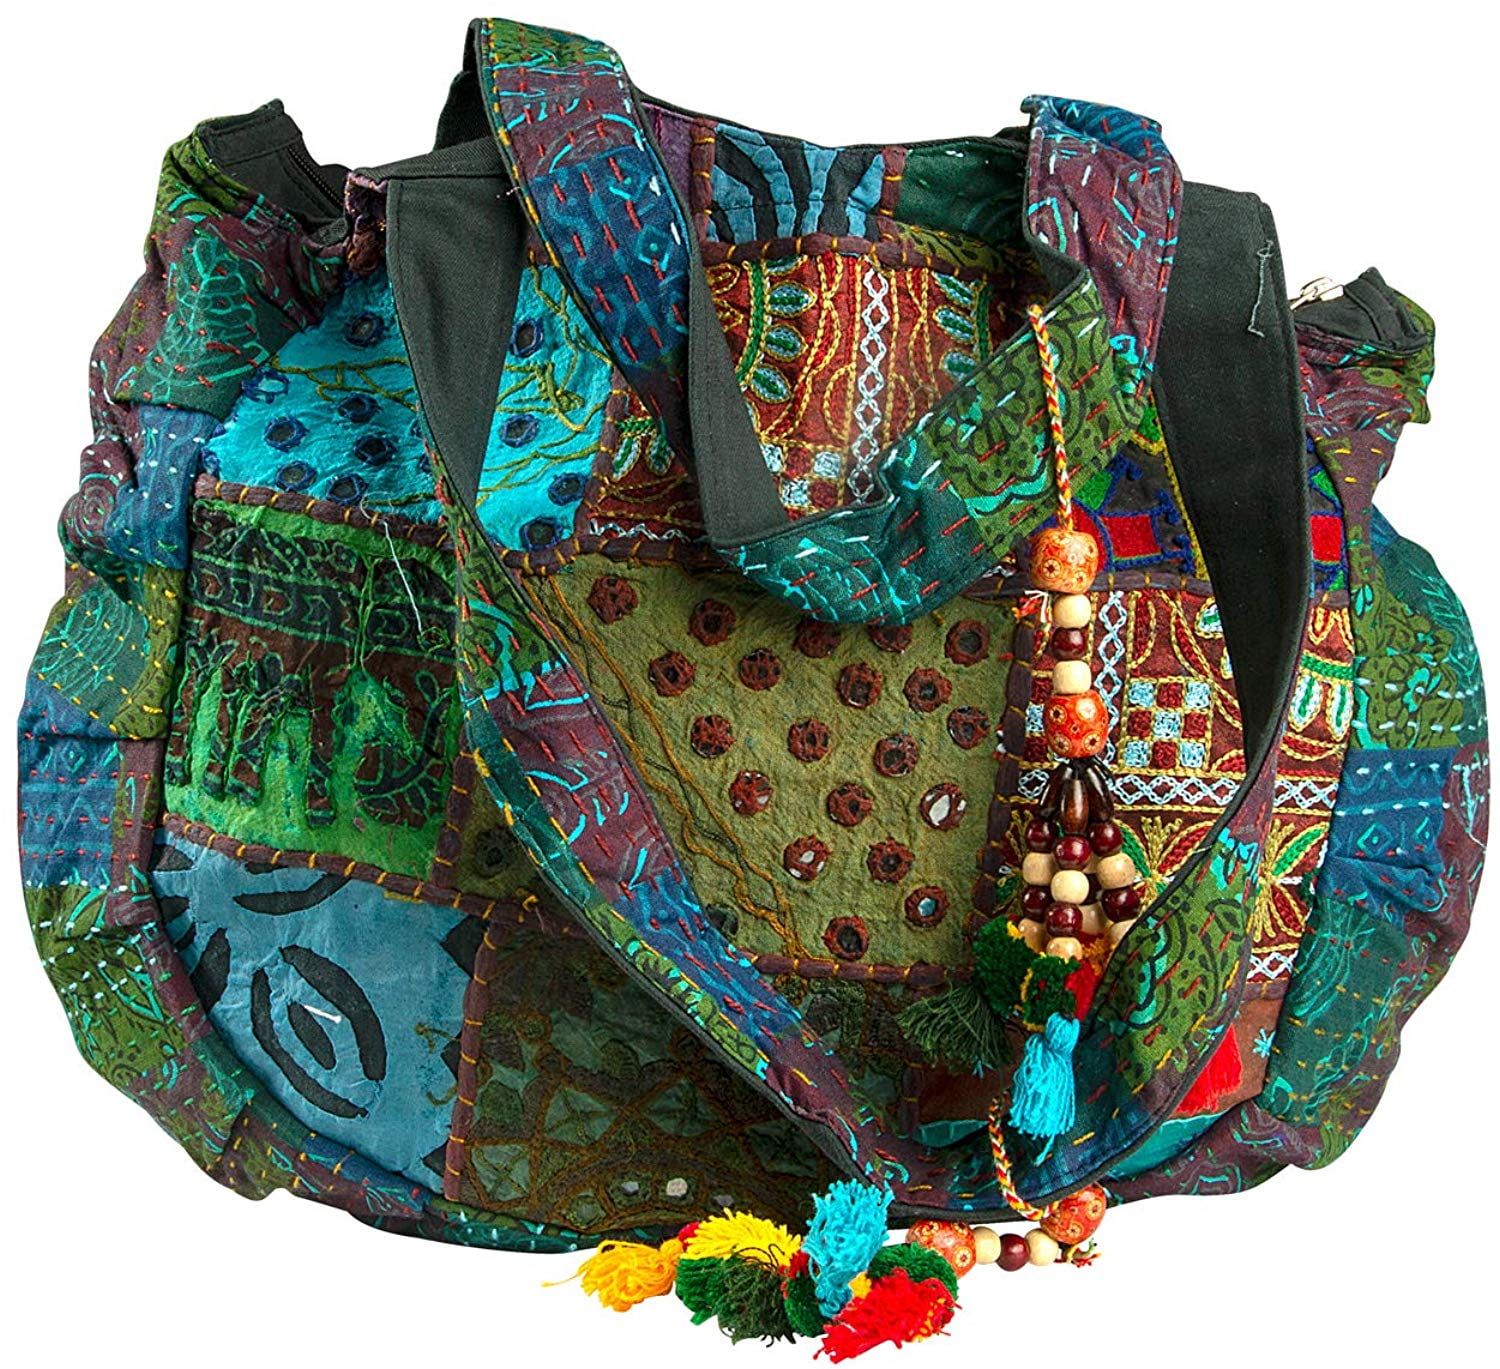 Arlington Boho Bags And Clothing :: Keweenaw Bay Indian Community